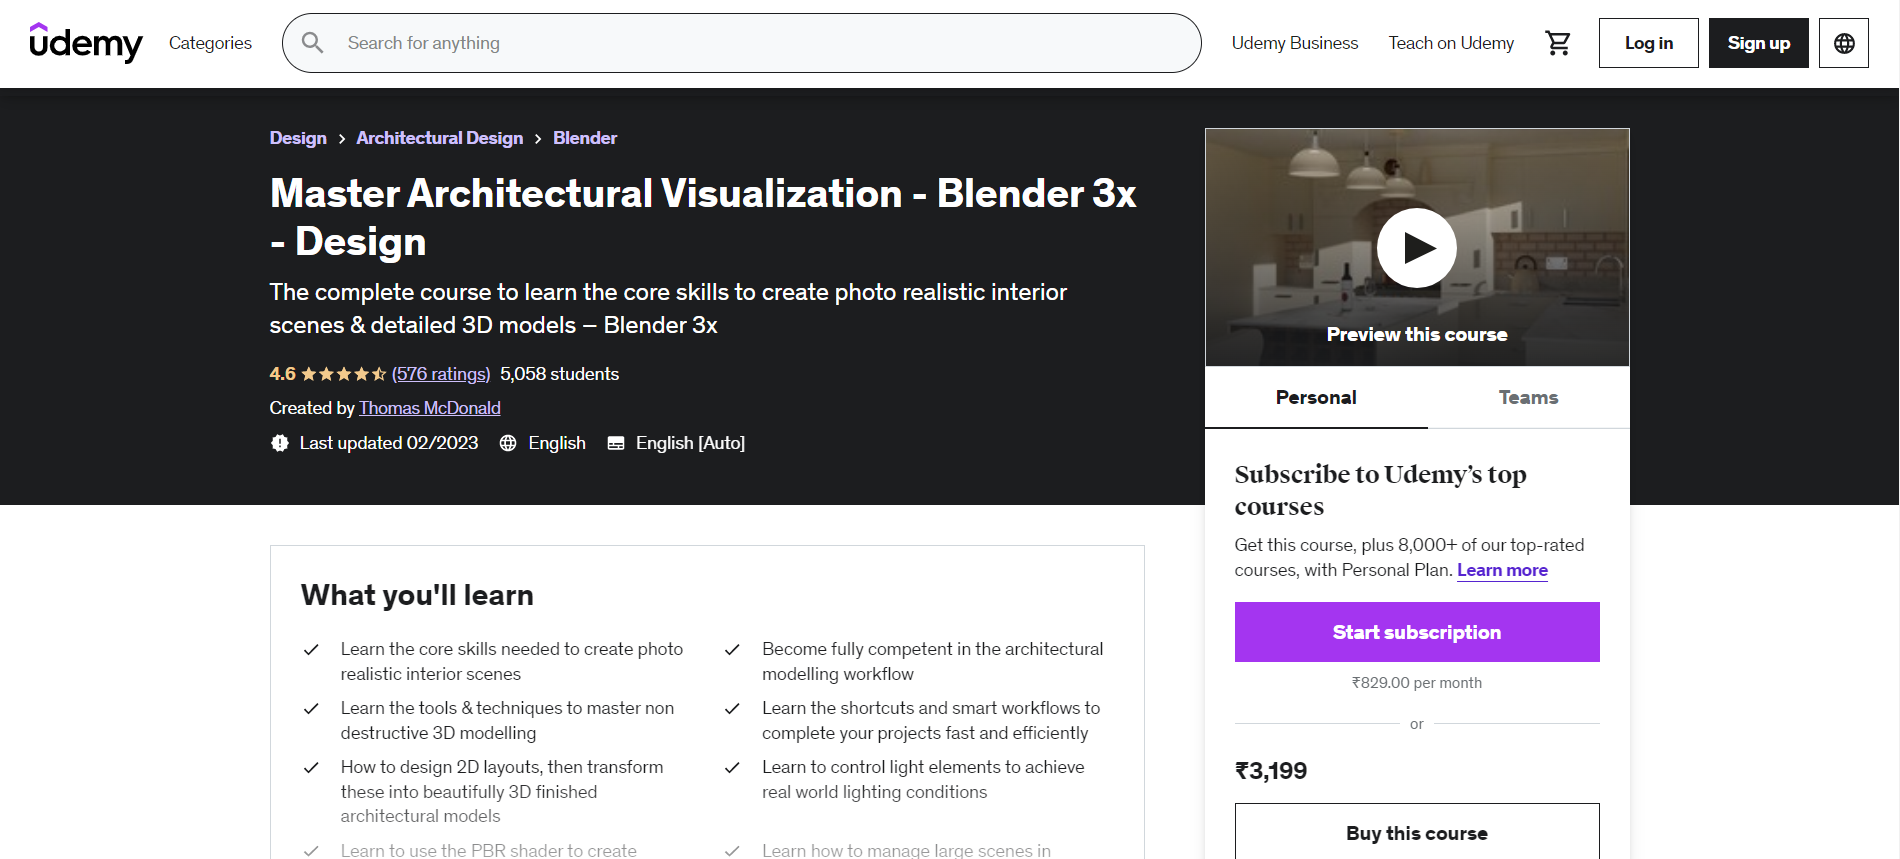 Master Architectural Visualization - Blender 3x - Design